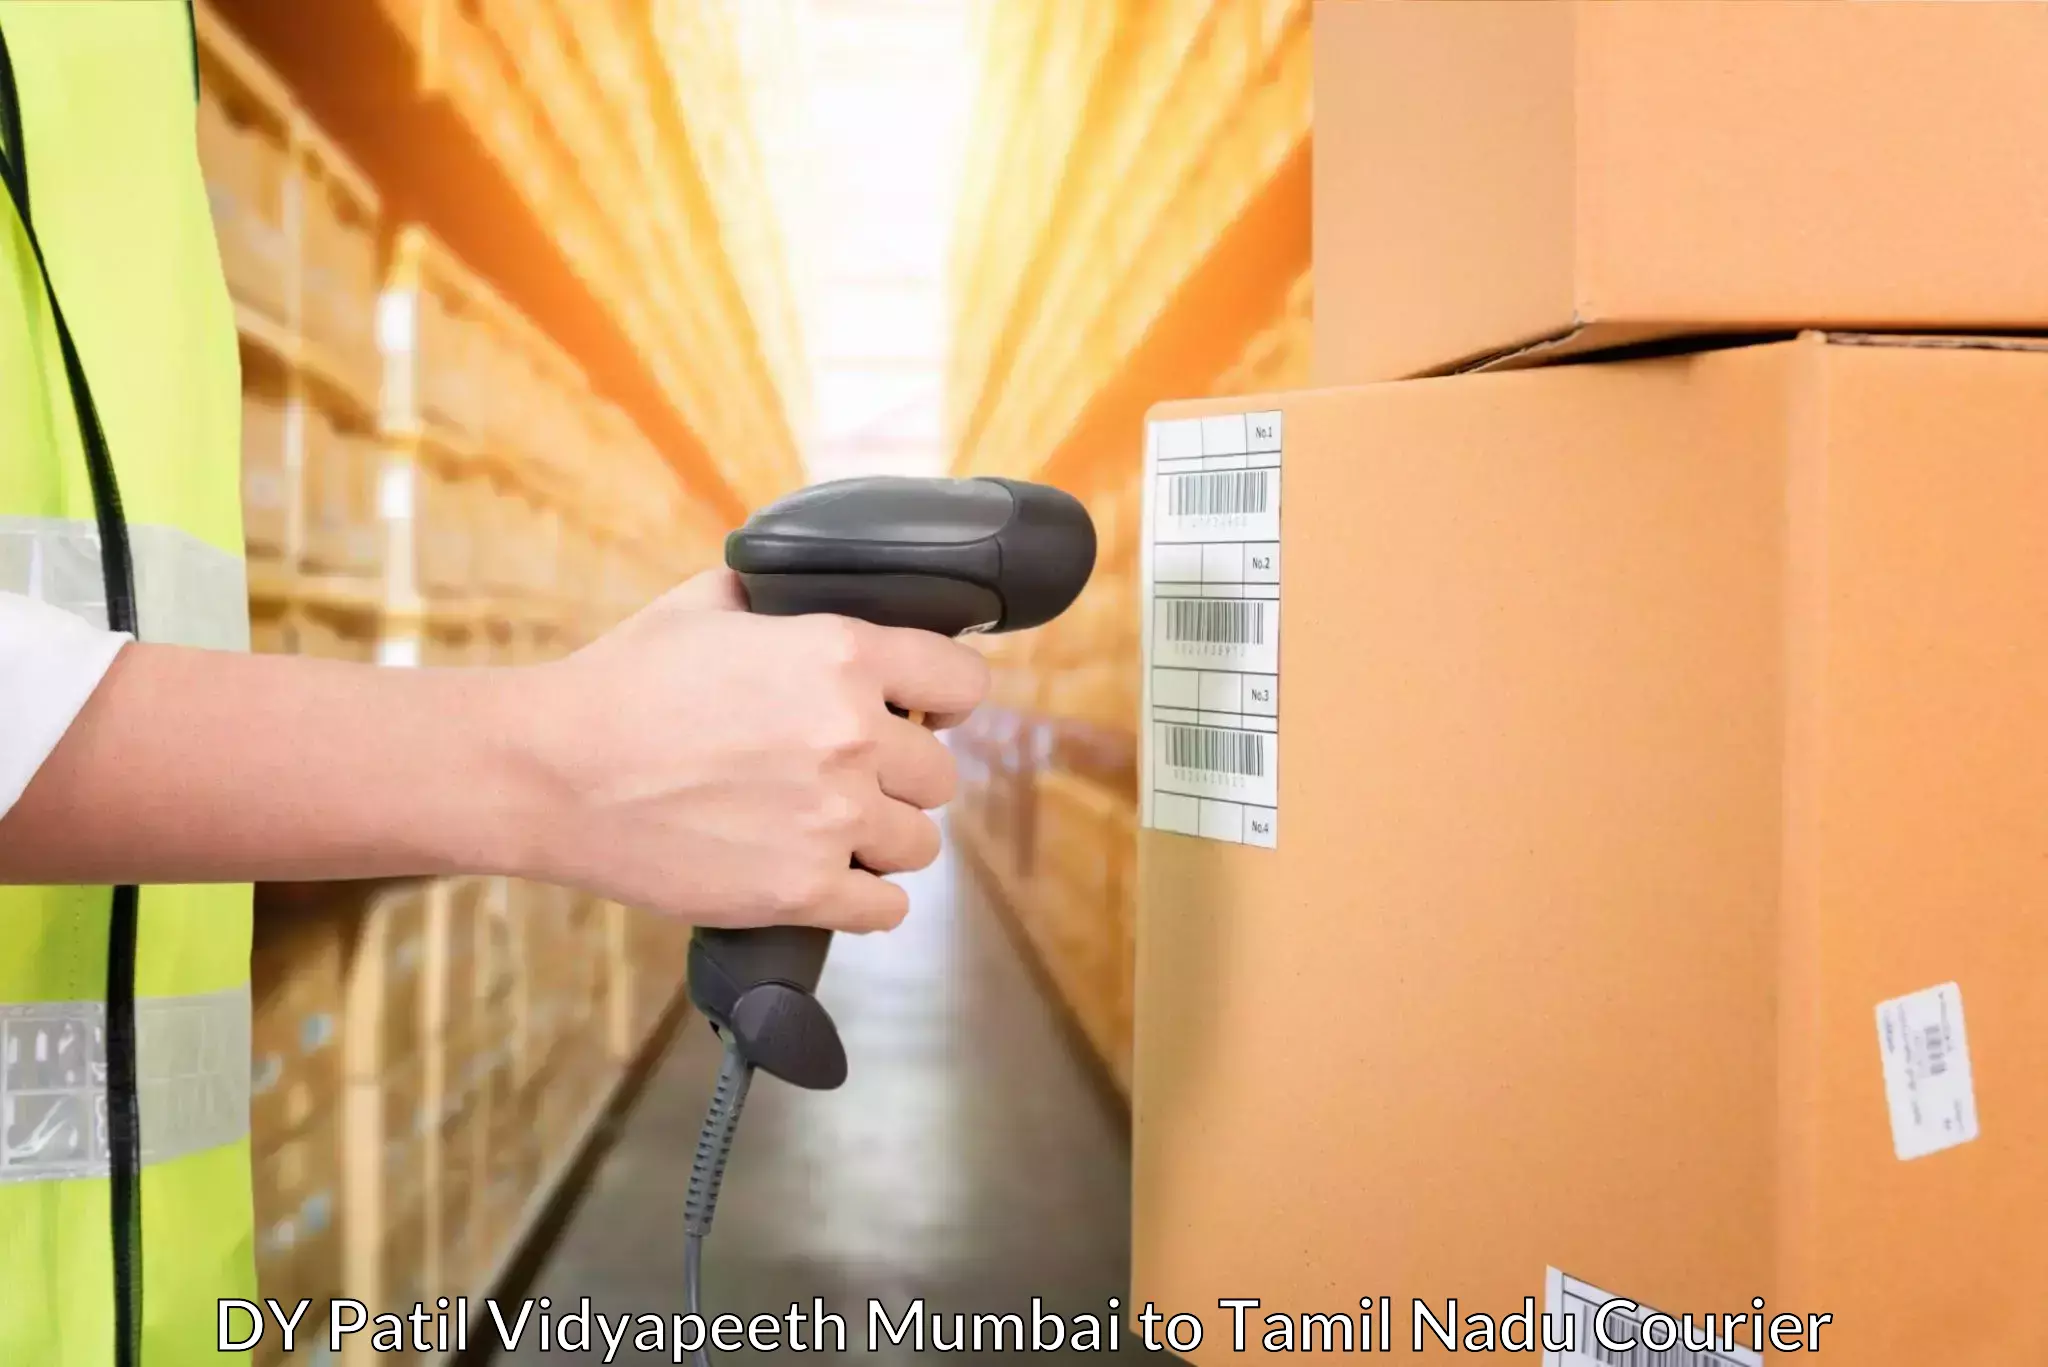 User-friendly delivery service DY Patil Vidyapeeth Mumbai to Nanguneri